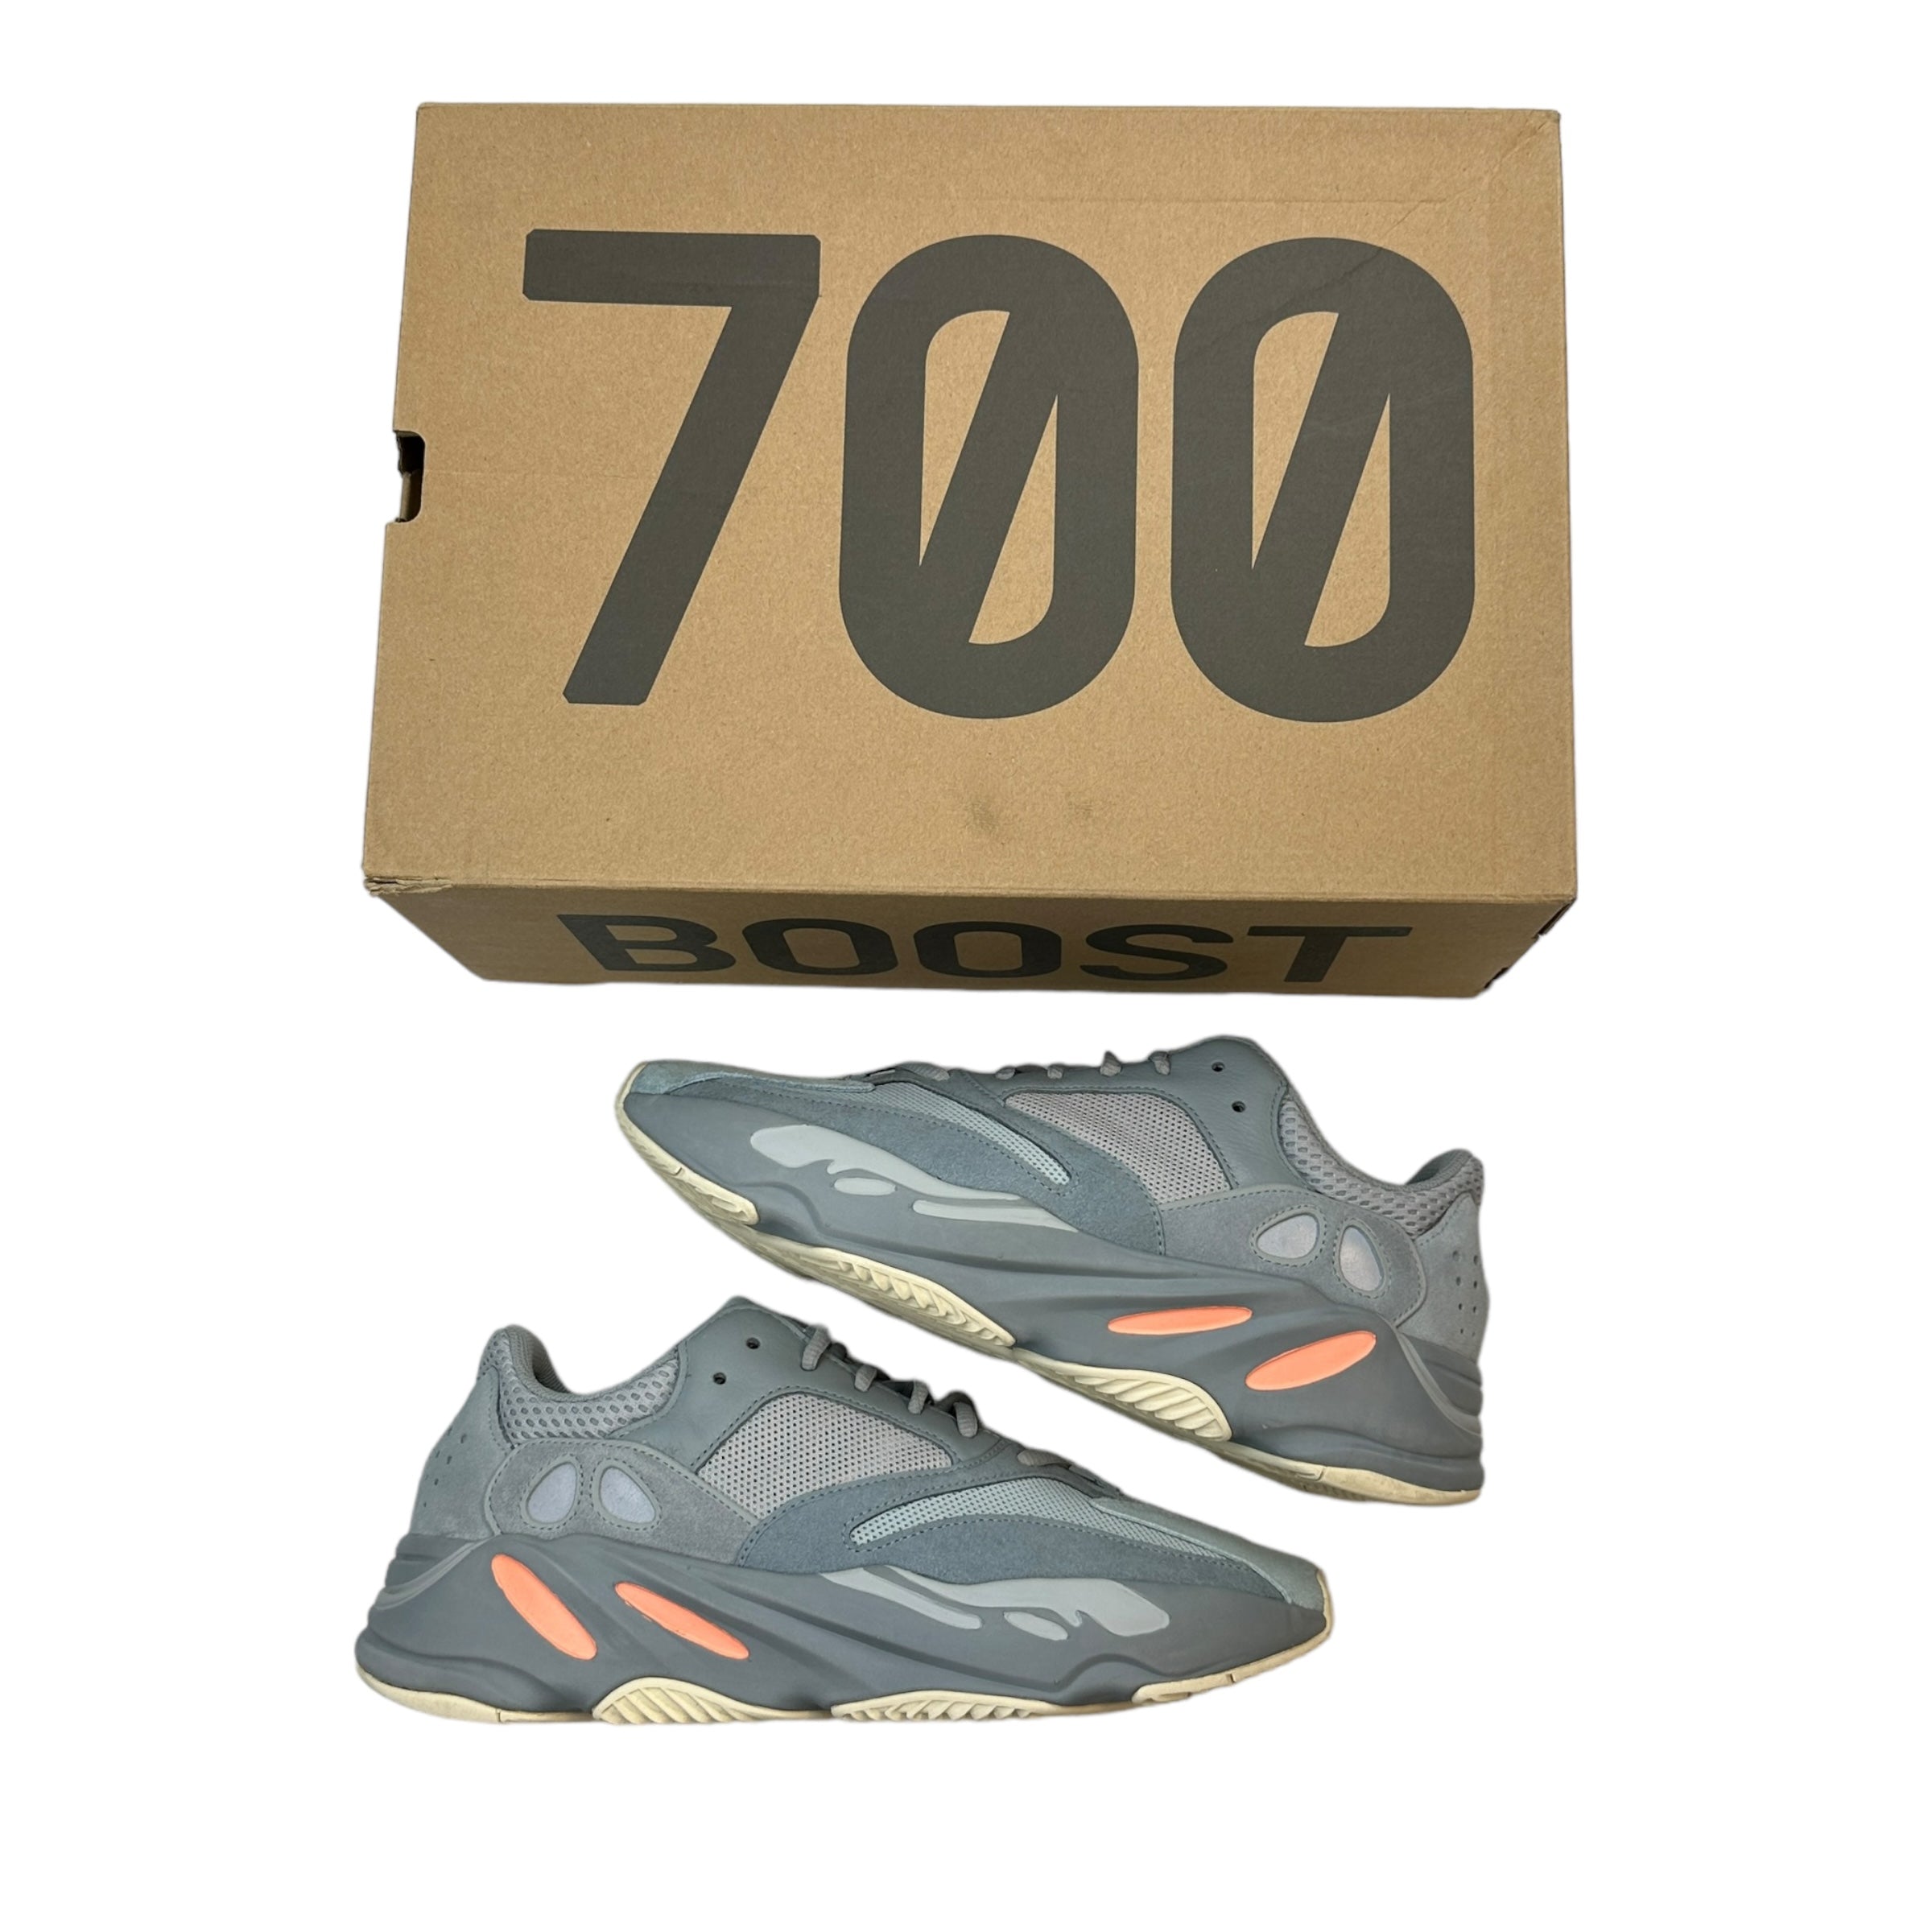 Adidas Yeezy Boost 700 Inertia (Used)